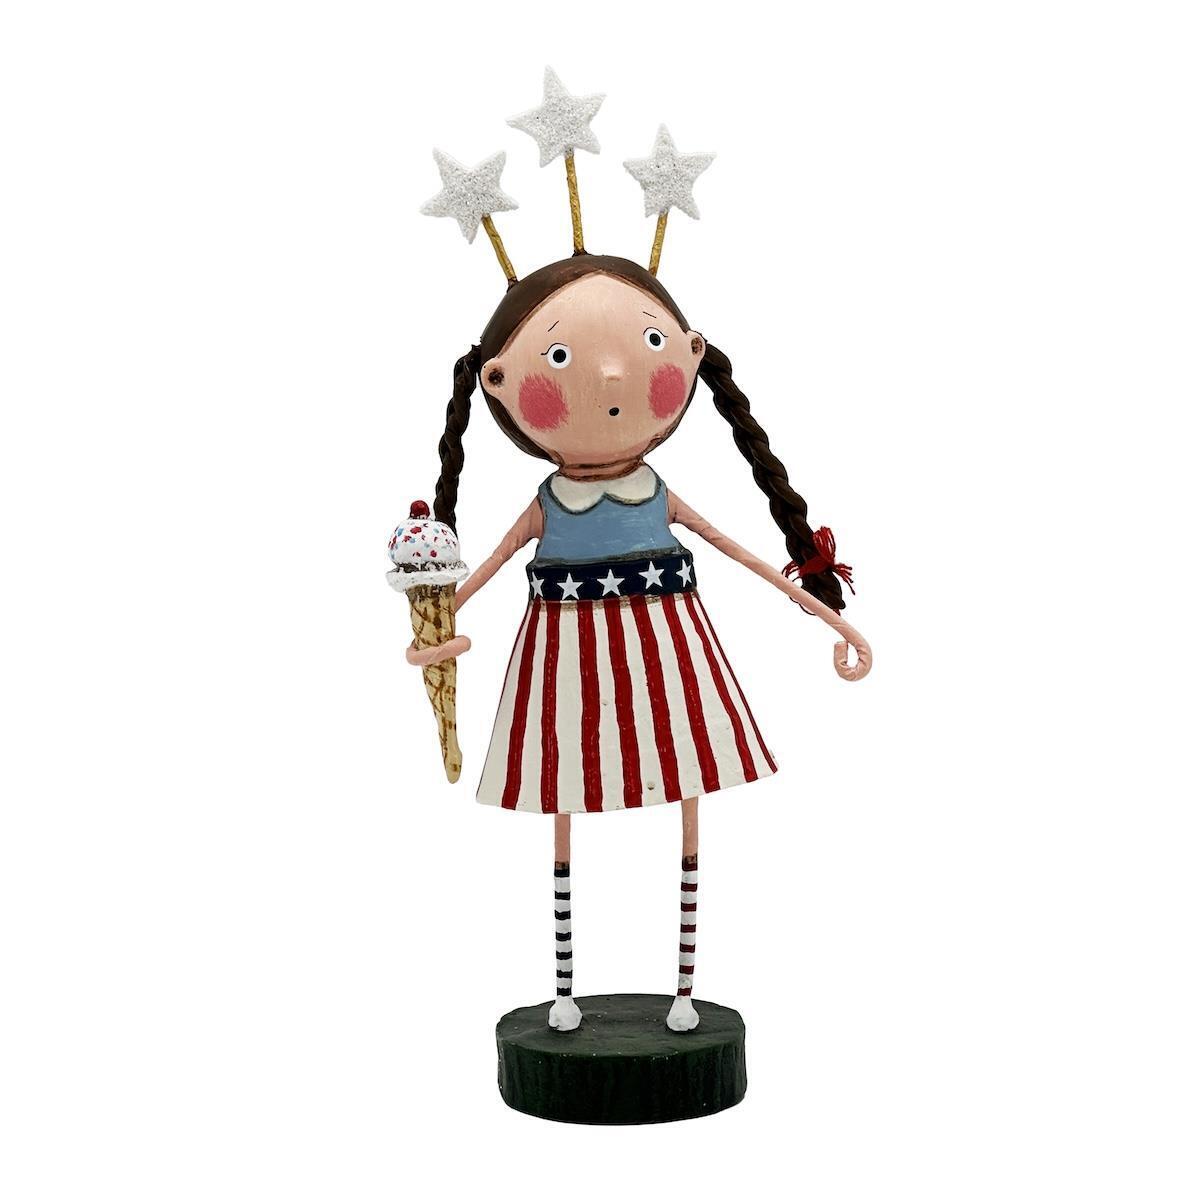 Lori Mitchell Stars, Stripes & Sprinkles Figurine 15517